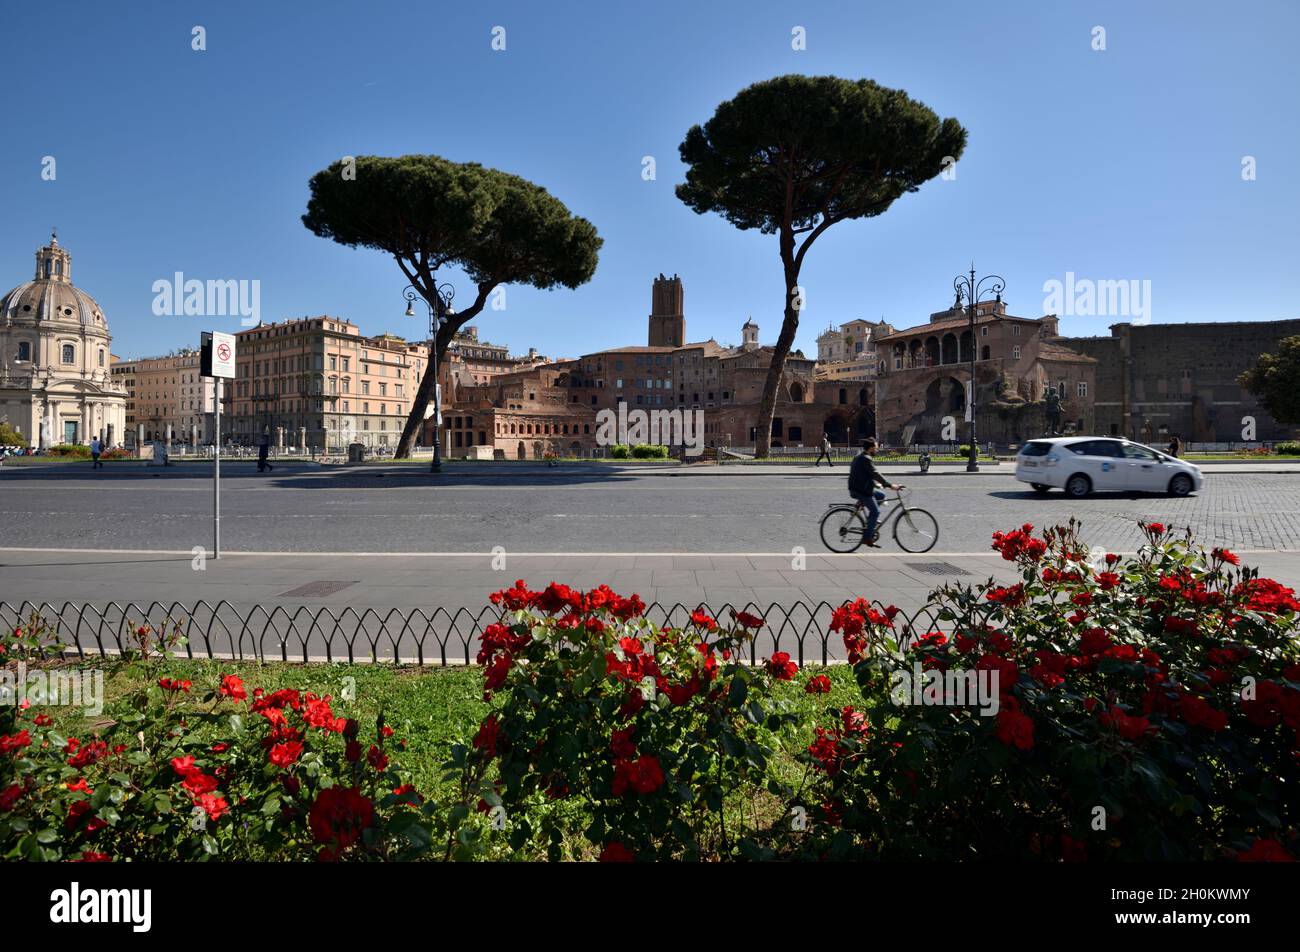 italy, rome, via dei fori imperiali, imperial forums street Stock Photo